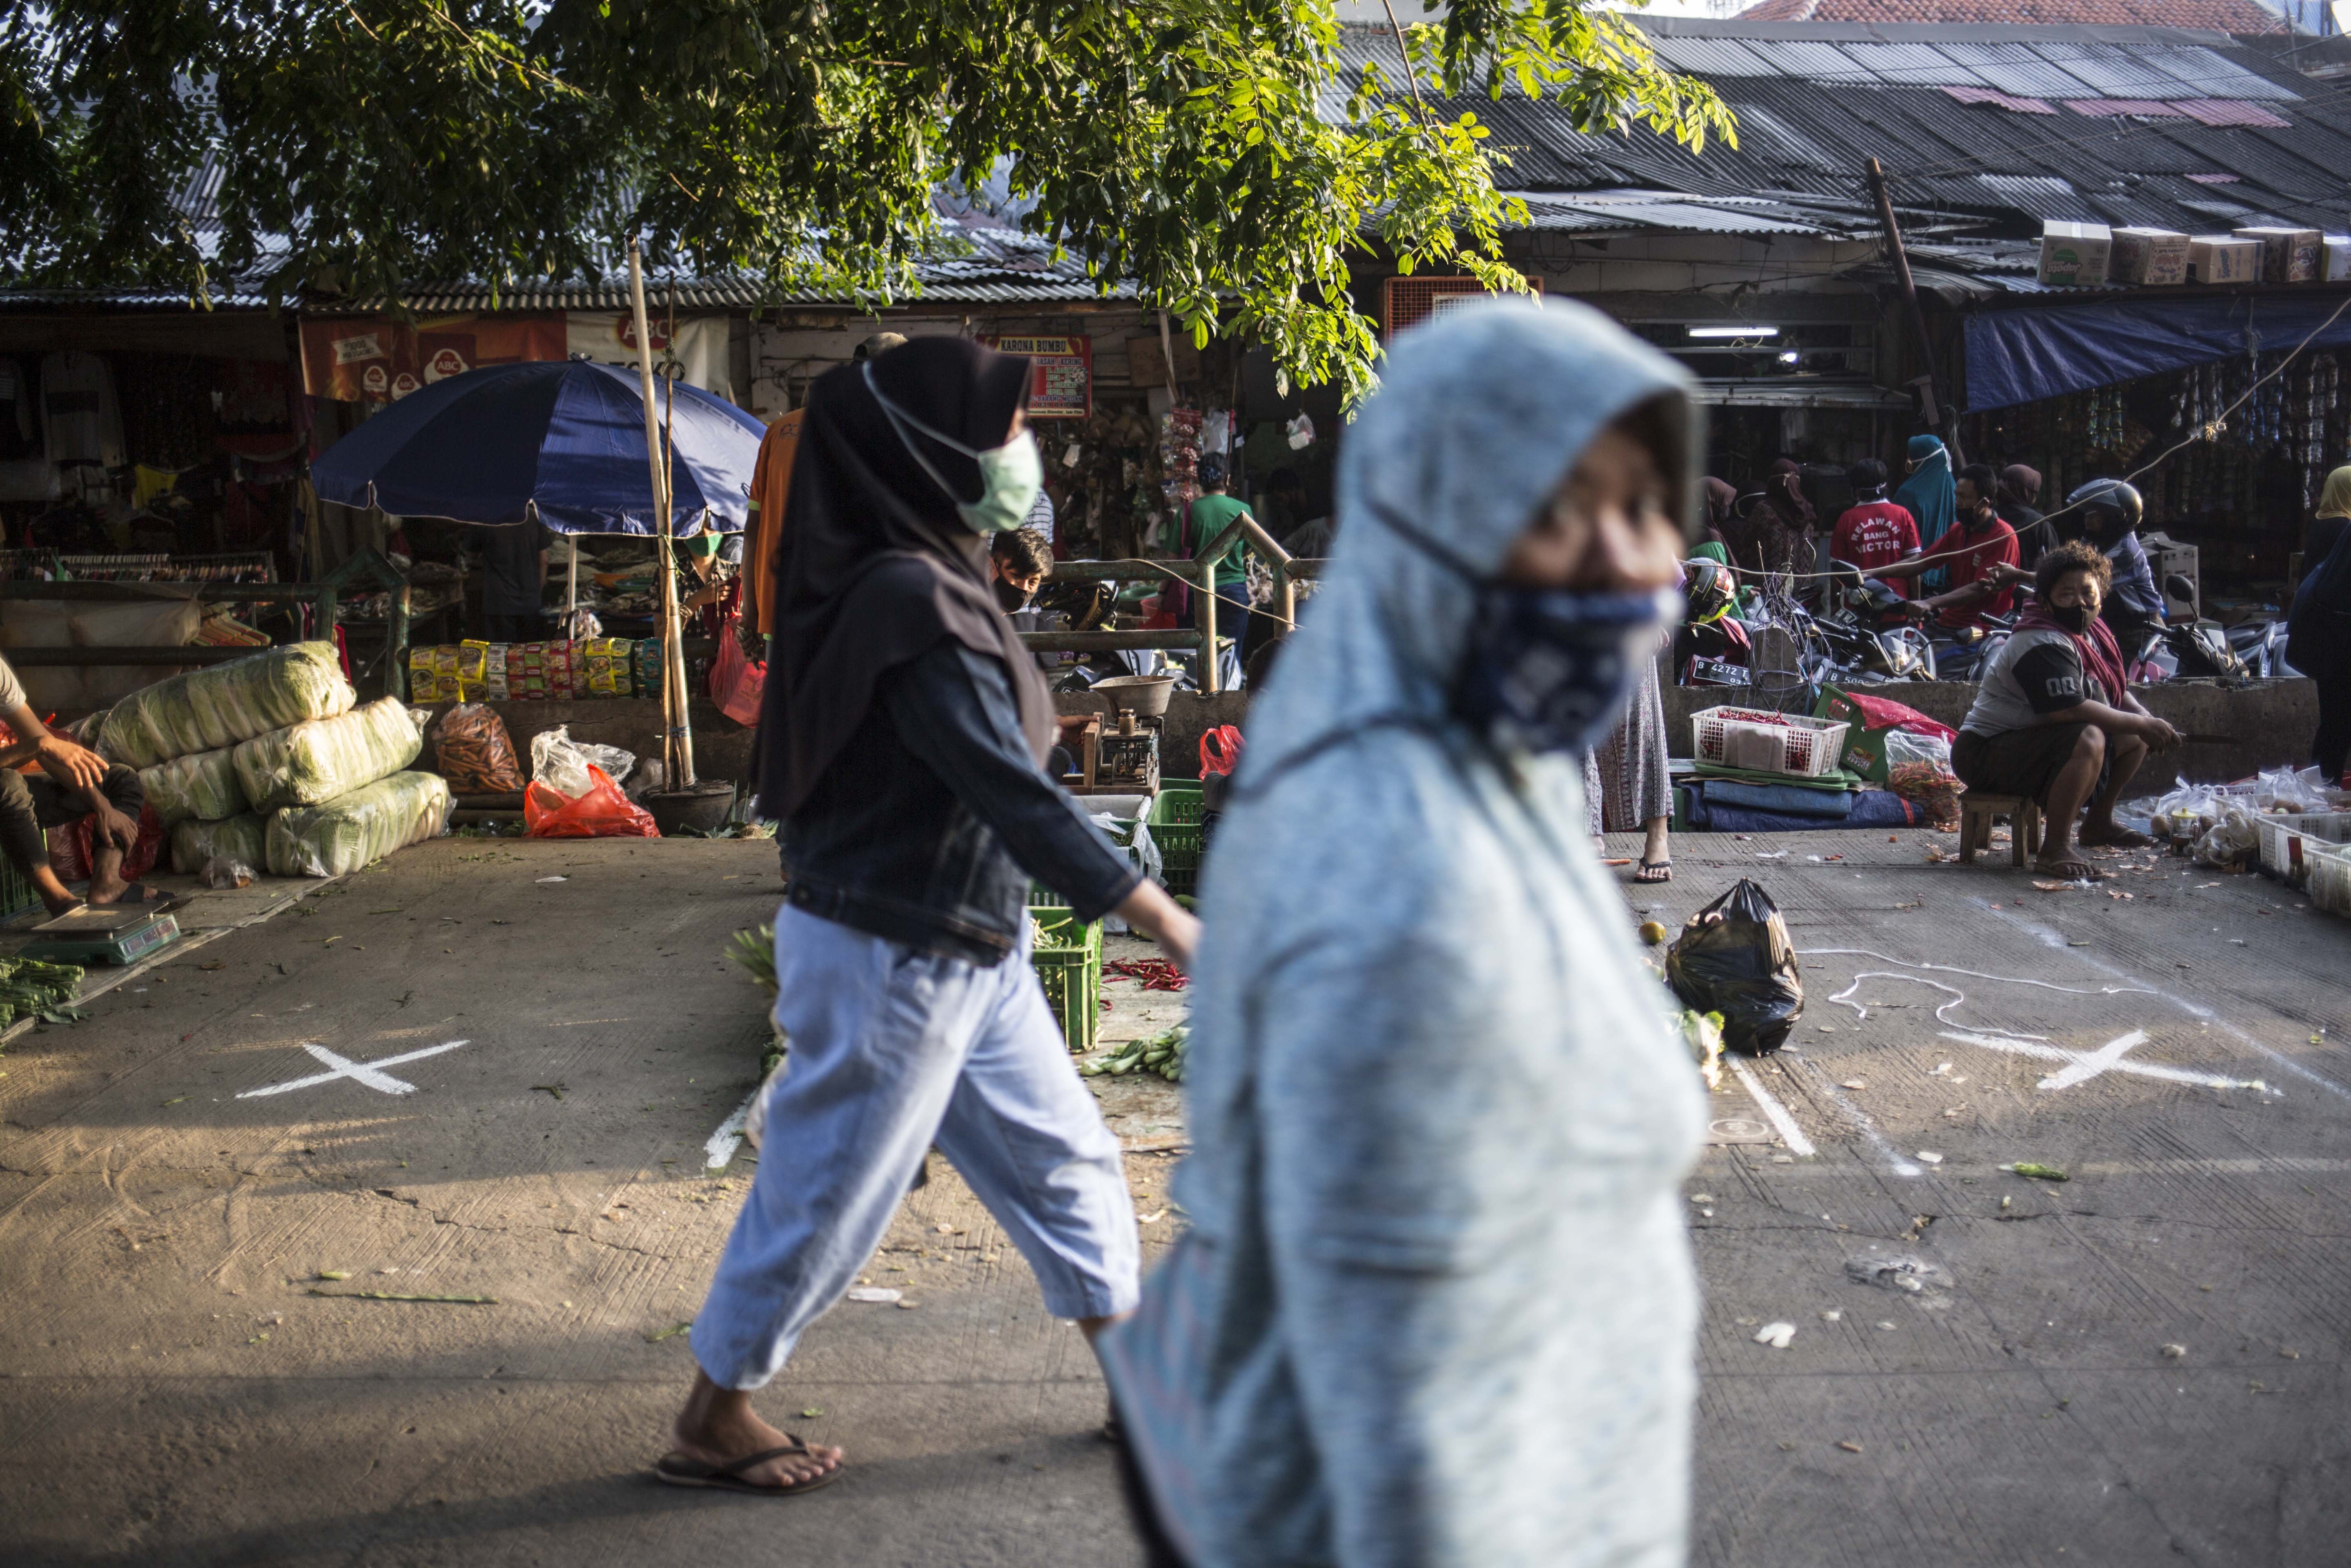 Pedagang berjaga jarak saat berjualan di Pasar Klender, Jakarat.